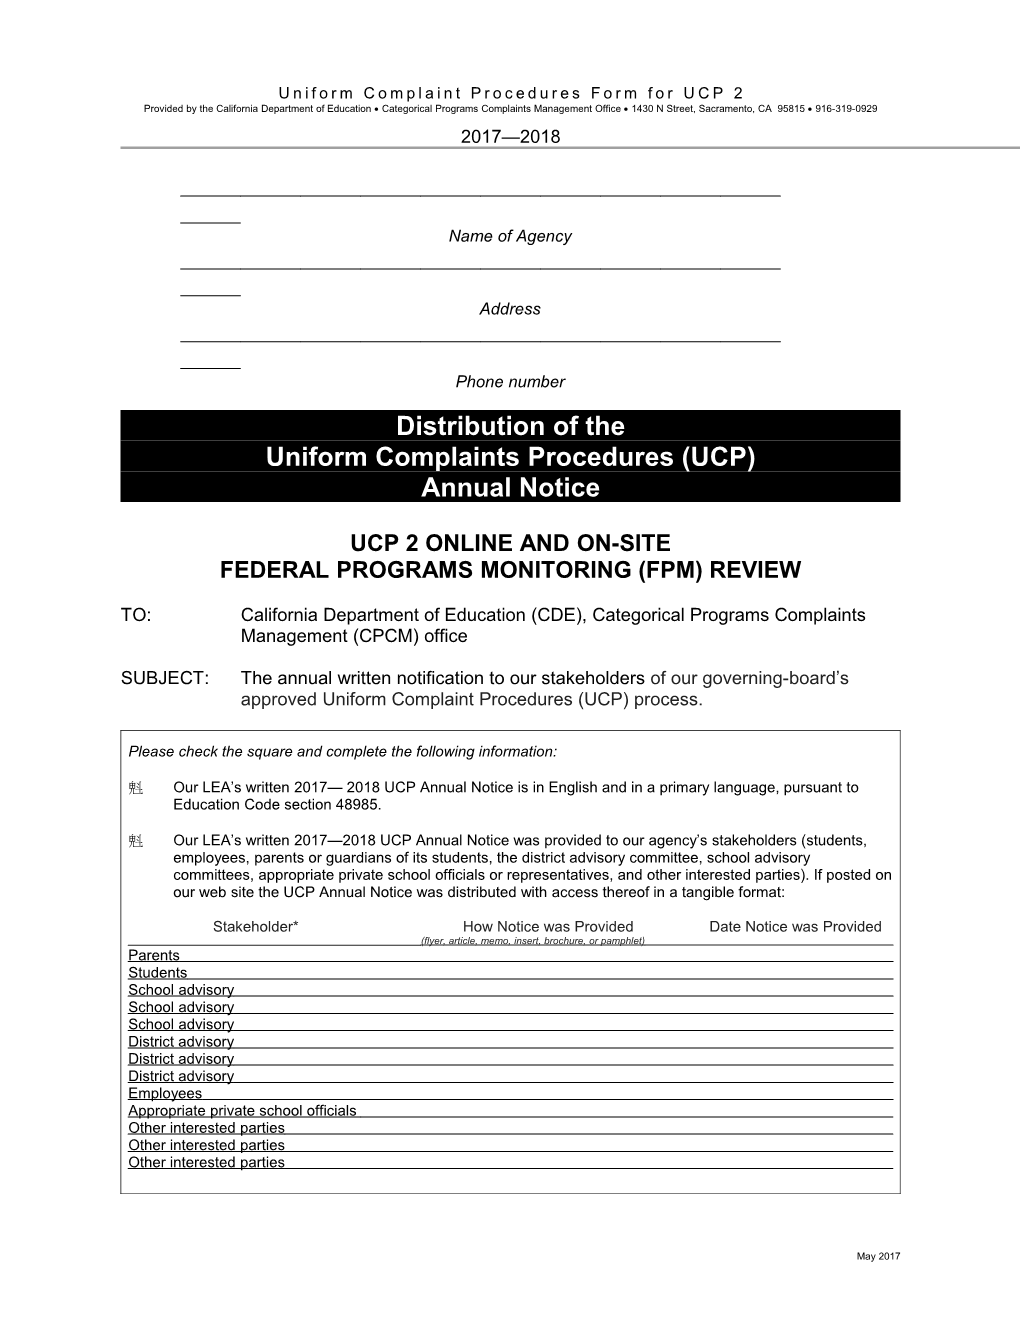 Distribution of the UCP Annual Notice - Uniform Complaint Procedures (CA Dept of Education)